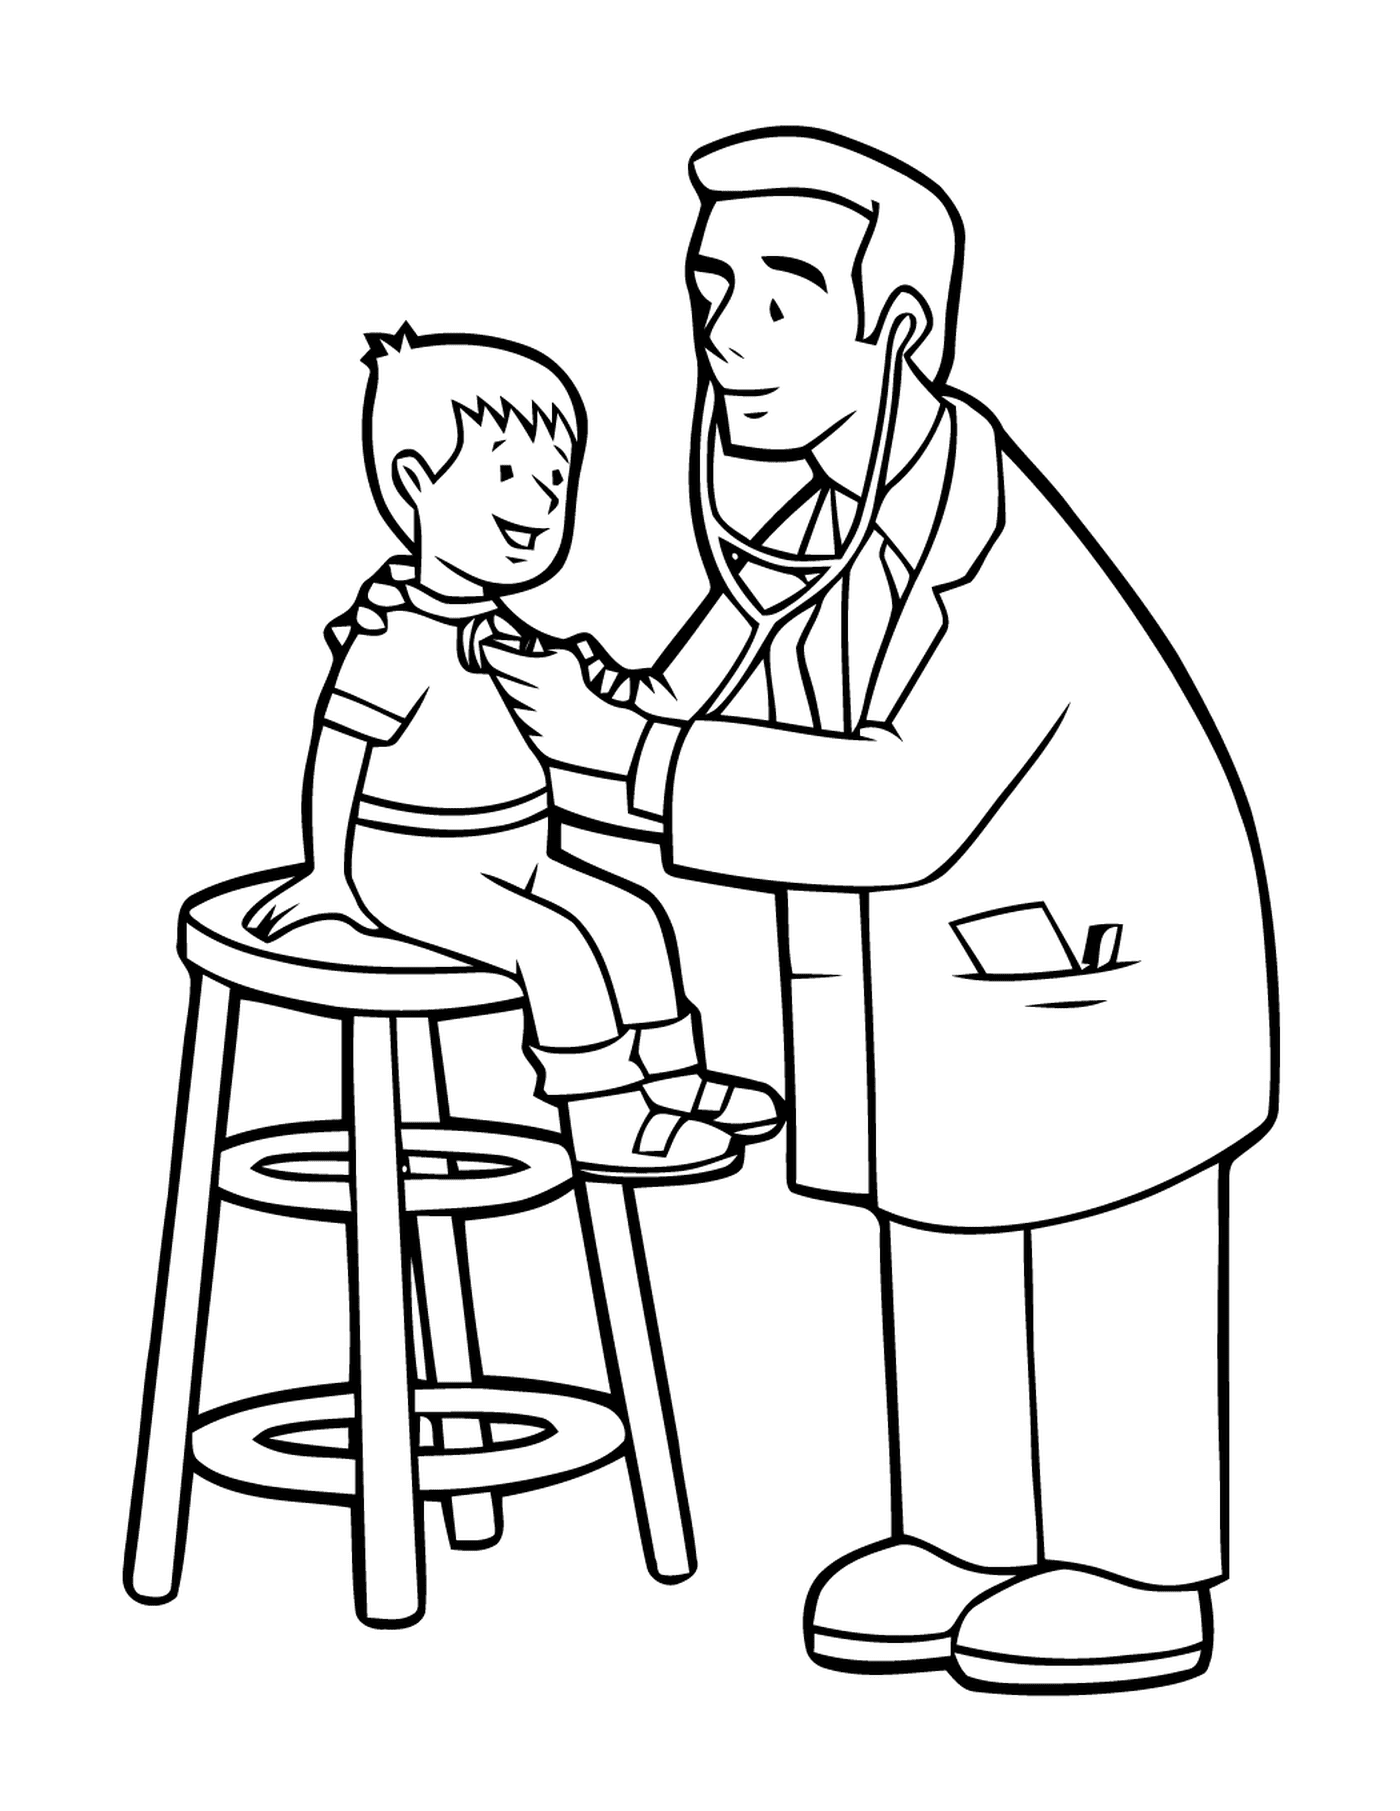   Un médecin examinant un enfant 